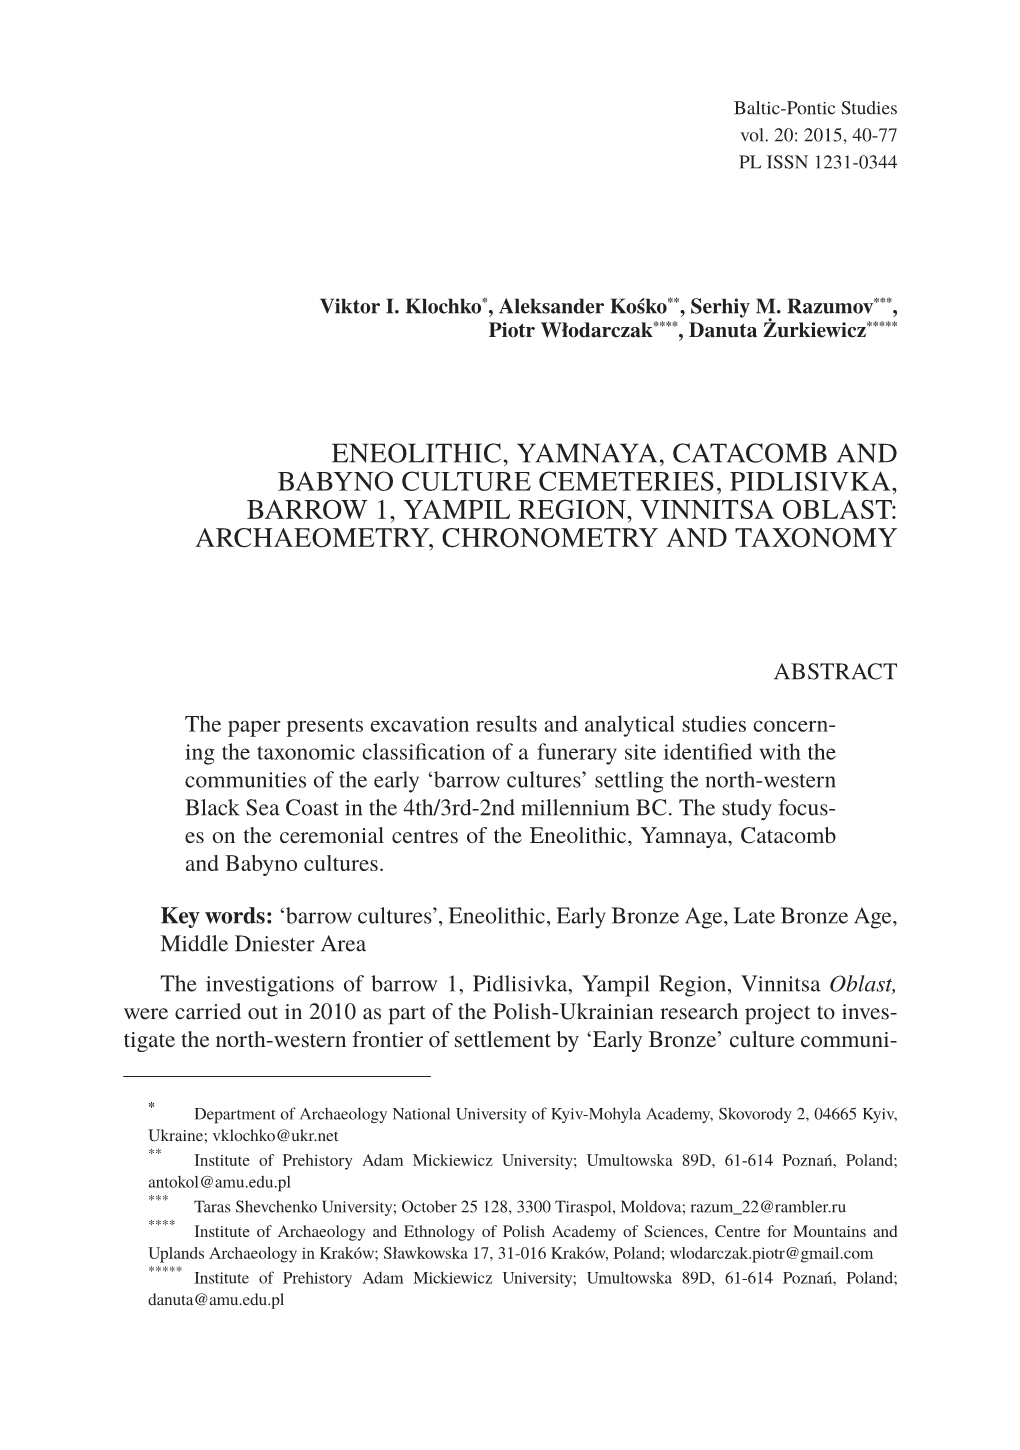 Eneolithic, Yamnaya, Catacomb and Babyno Culture Cemeteries, Pidlisivka, Barrow 1, Yampil Region, Vinnitsa Oblast: Archaeometry, Chronometry and Taxonomy